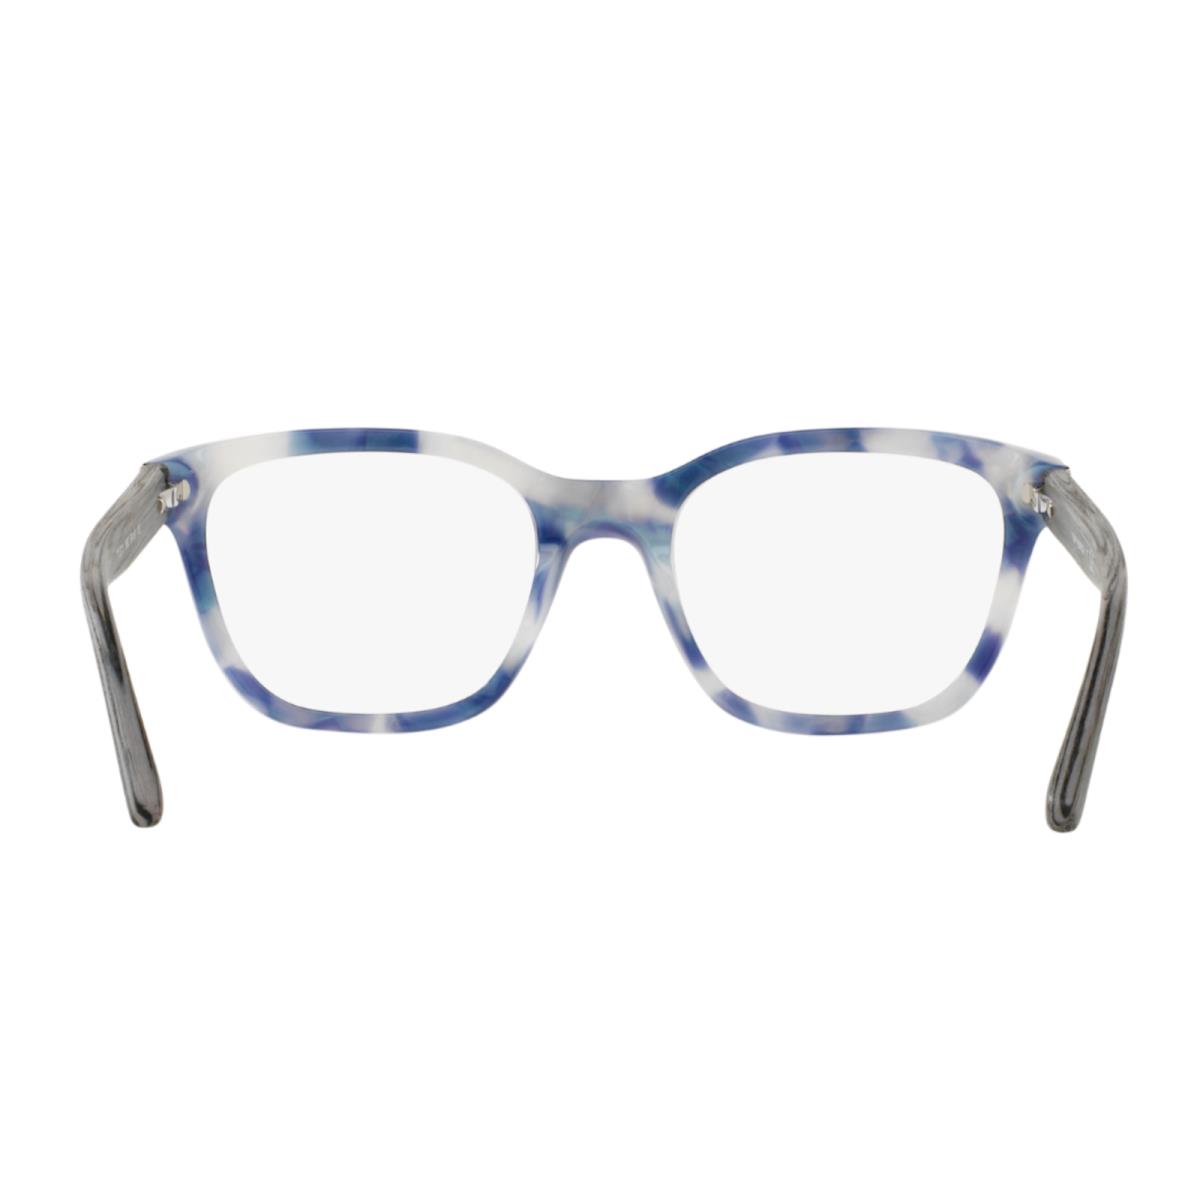 Tory Burch Rx-able Eyeglasses TY 2073 1652 52-19 Blue White Tortoise Frames  - Tory Burch eyeglasses - 037277454533 | Fash Brands